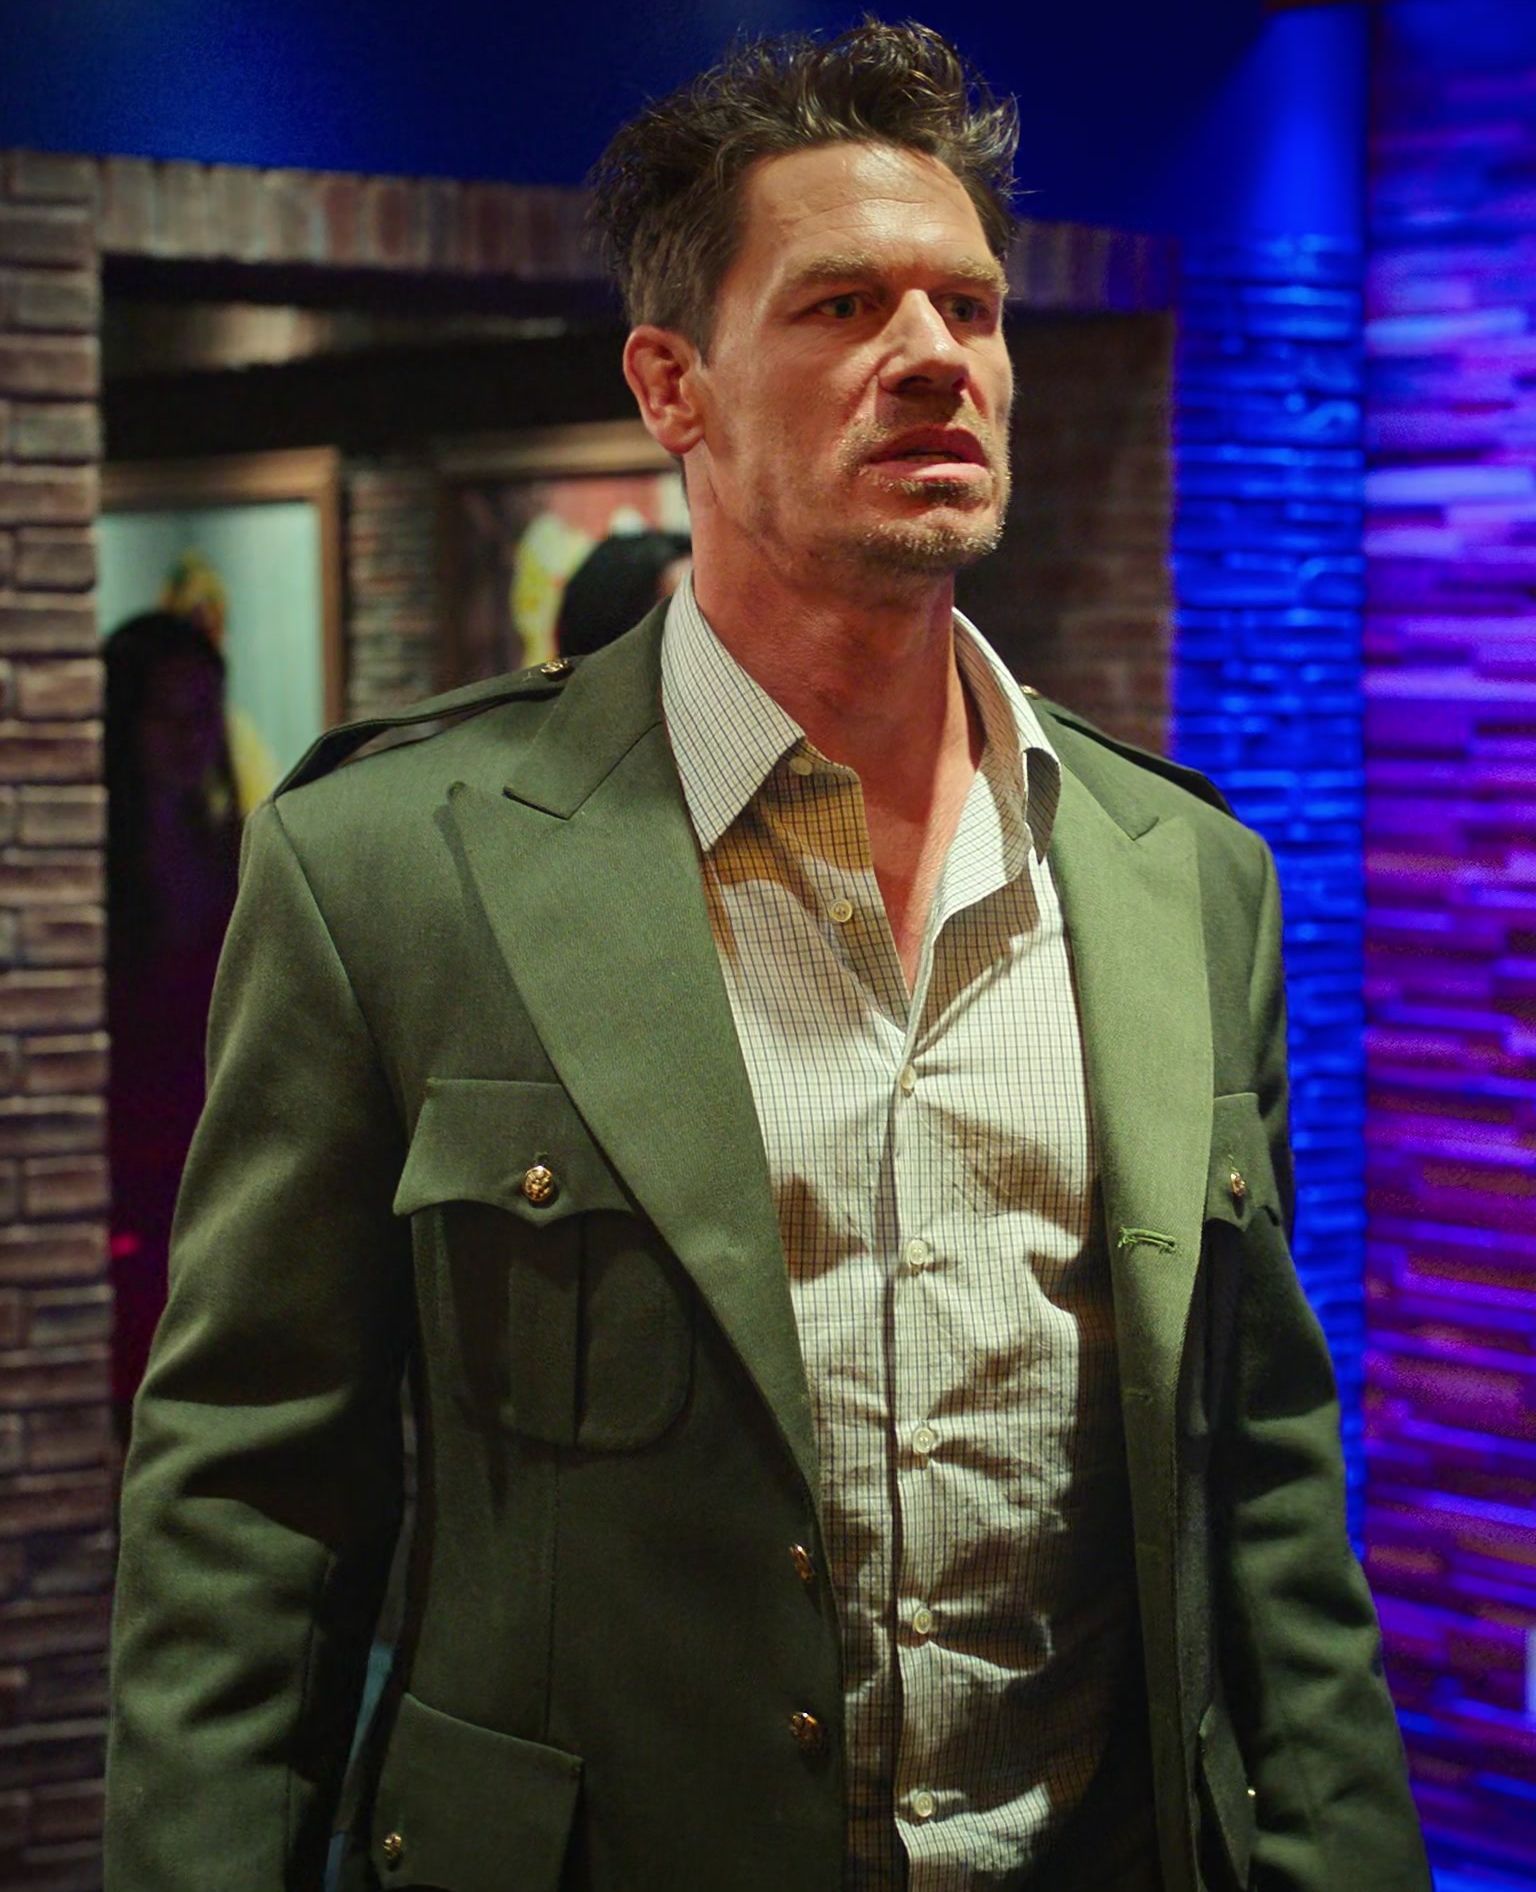 Worn on Vacation Friends 2 (2023) Movie - Military Safari Green Jacket Worn by John Cena as Ron